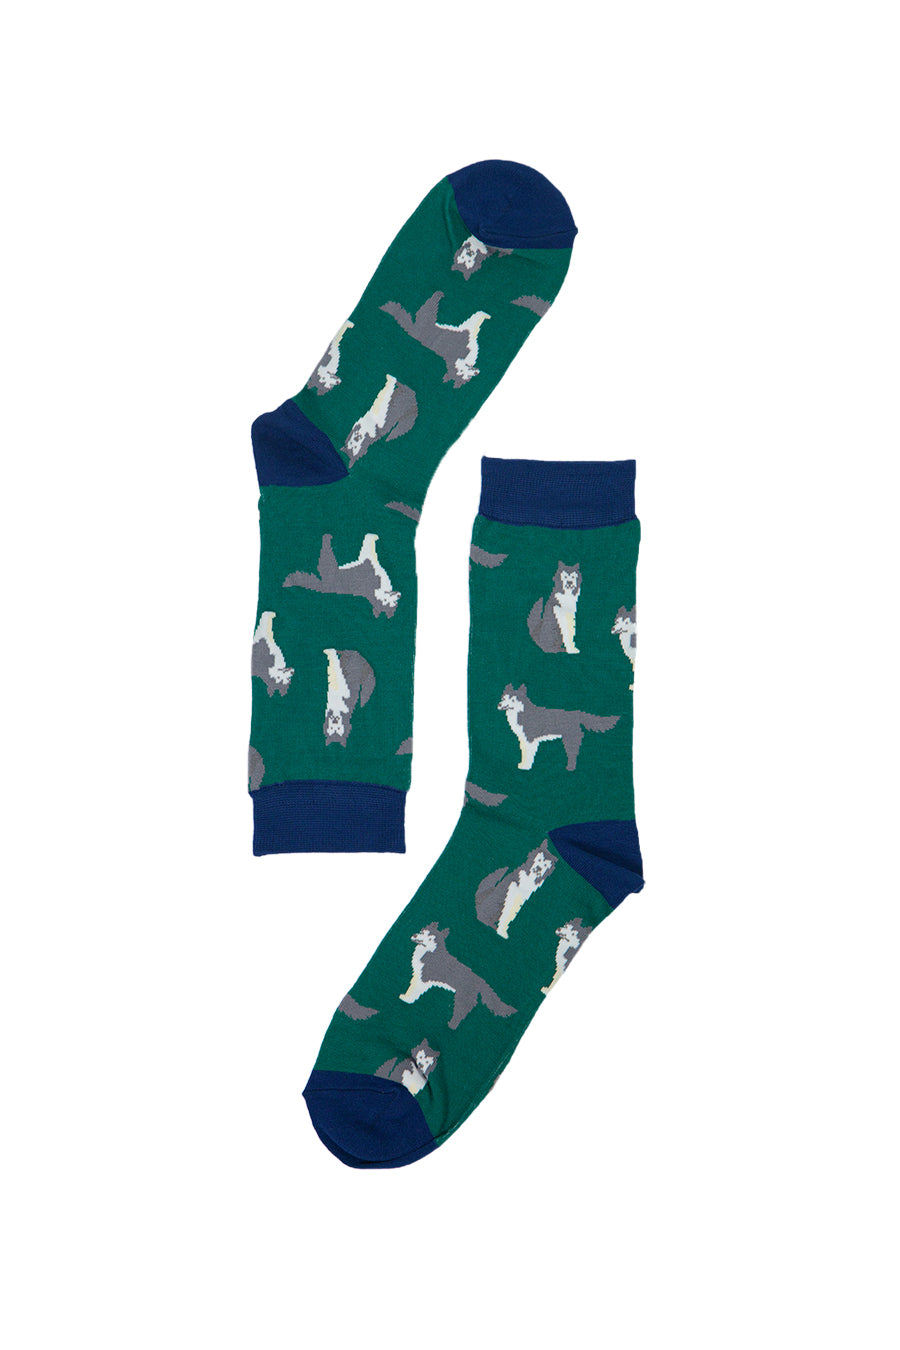 green bamboo dress socks with siberian husky dogs